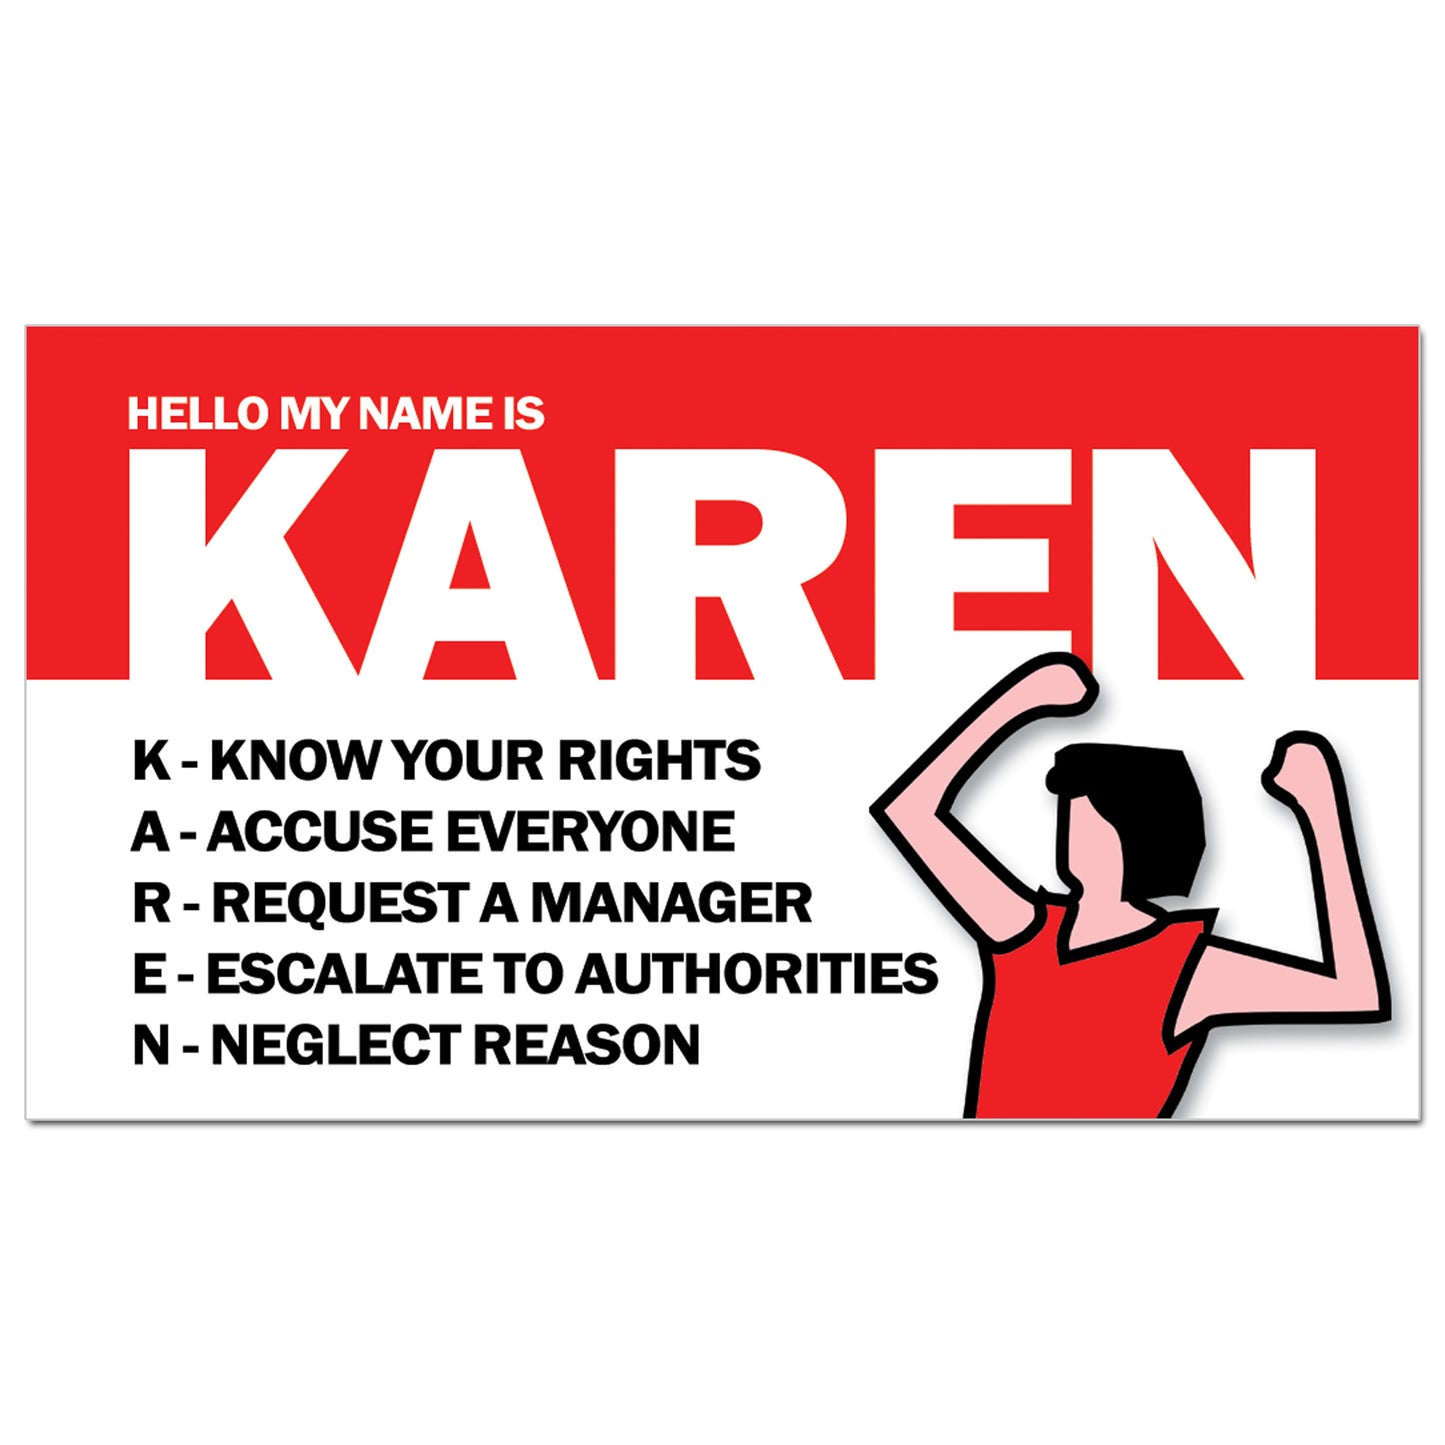 Hello My Name is Karen Cards